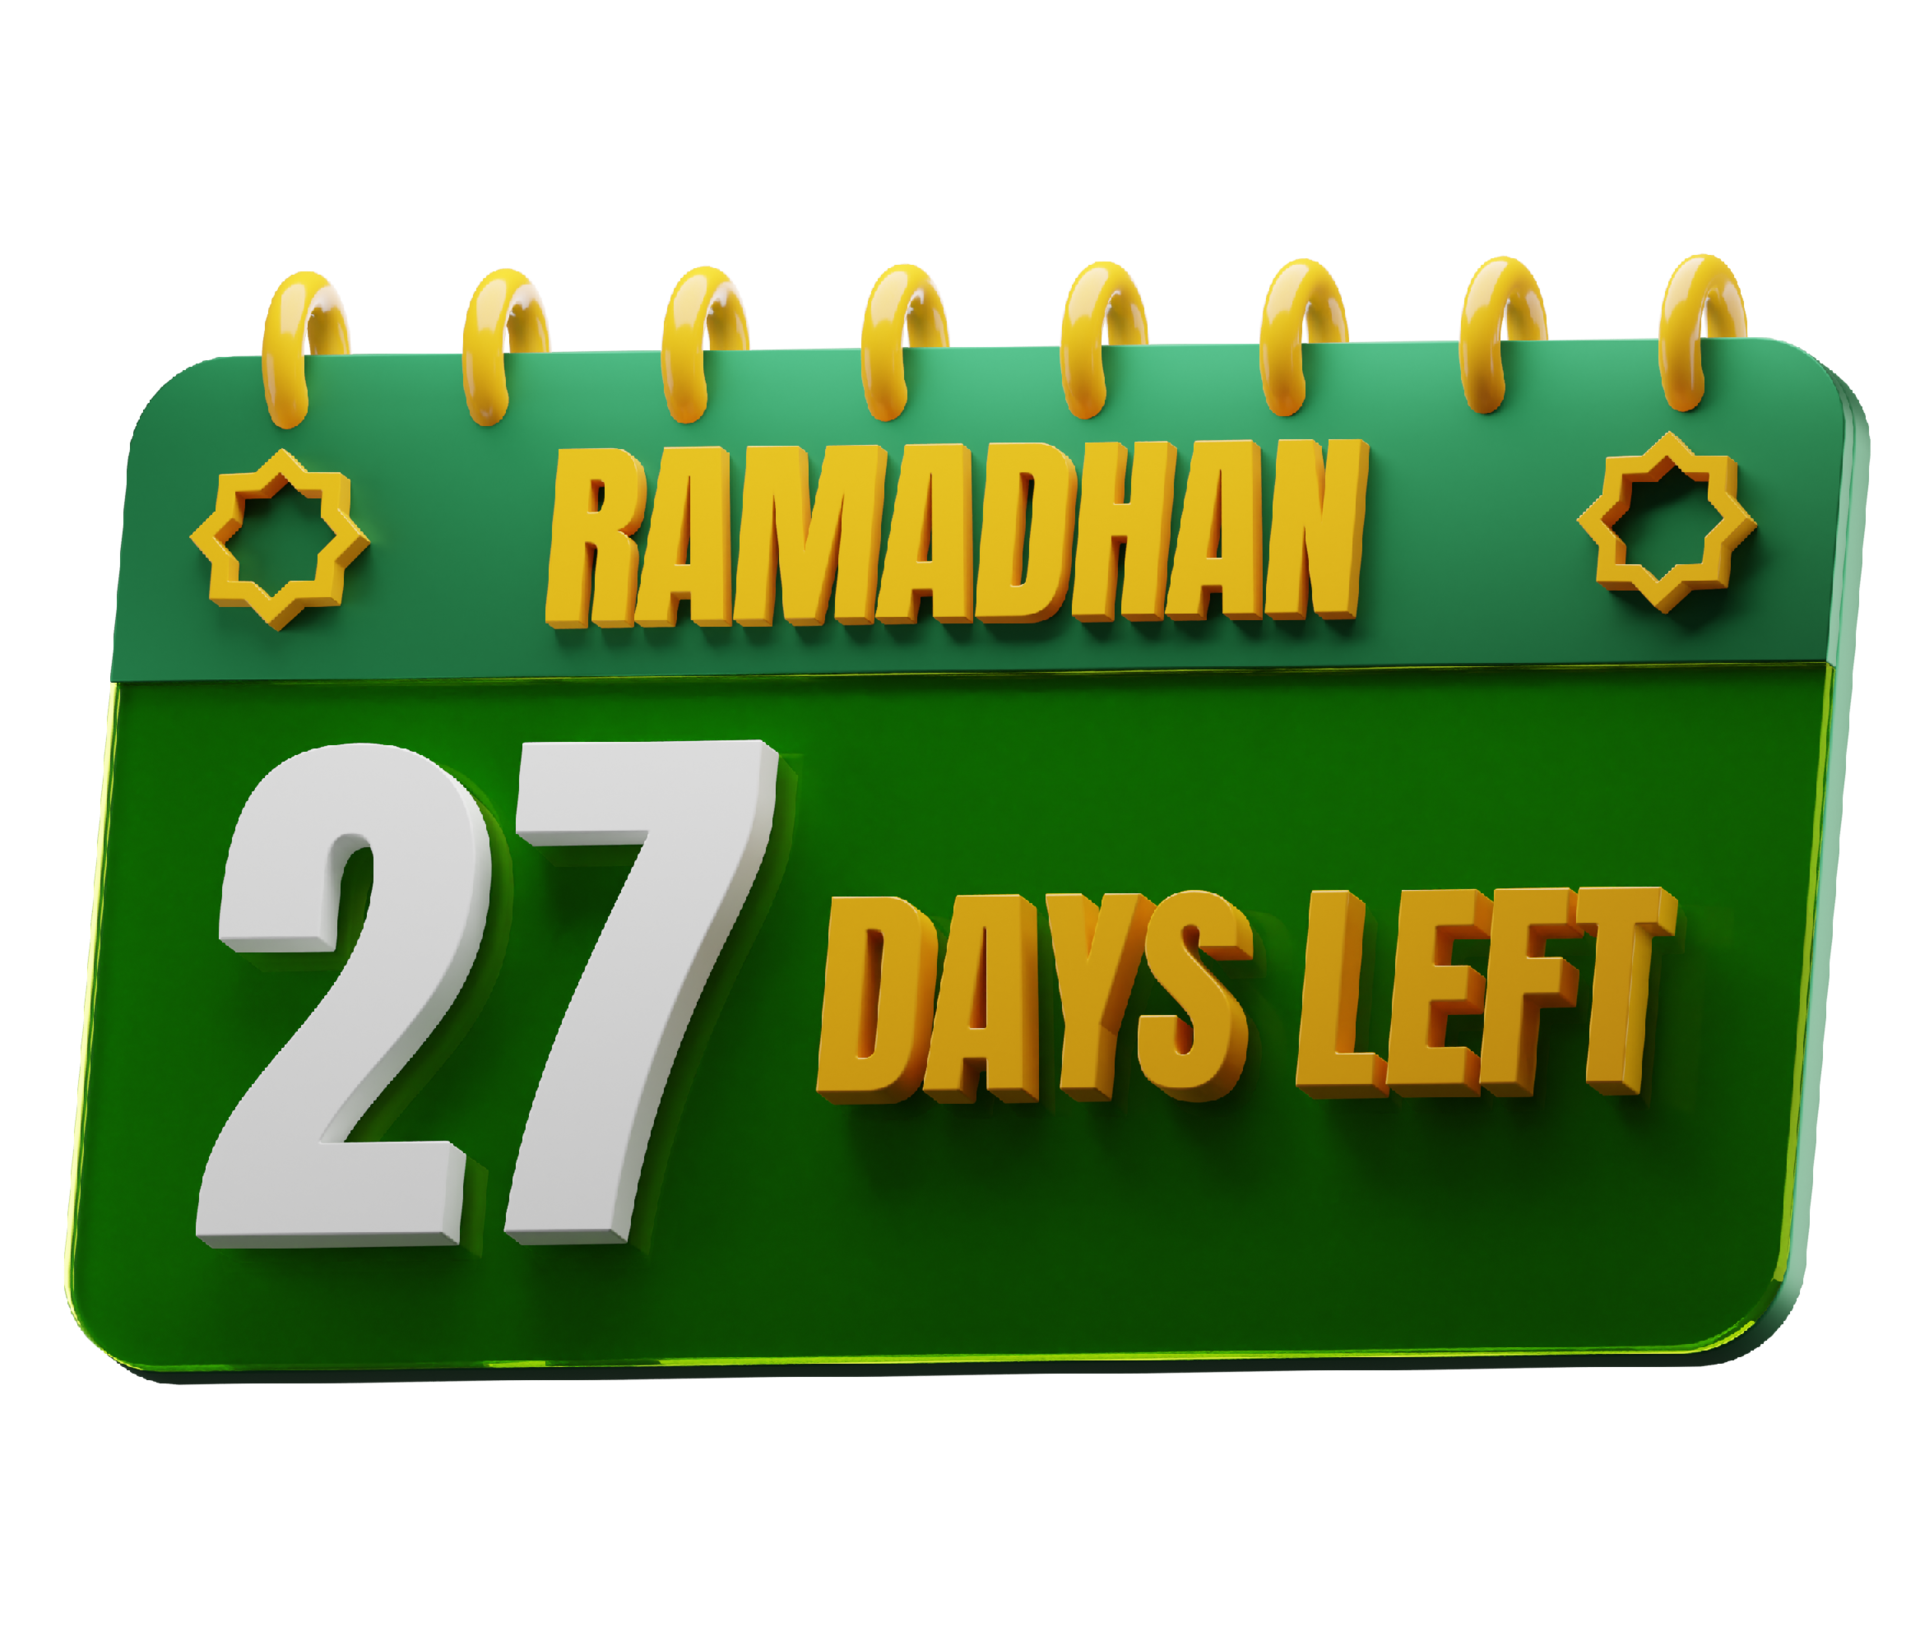 27 Days Left to Ramadan Month. Islamic Decorative Element. Ramadan